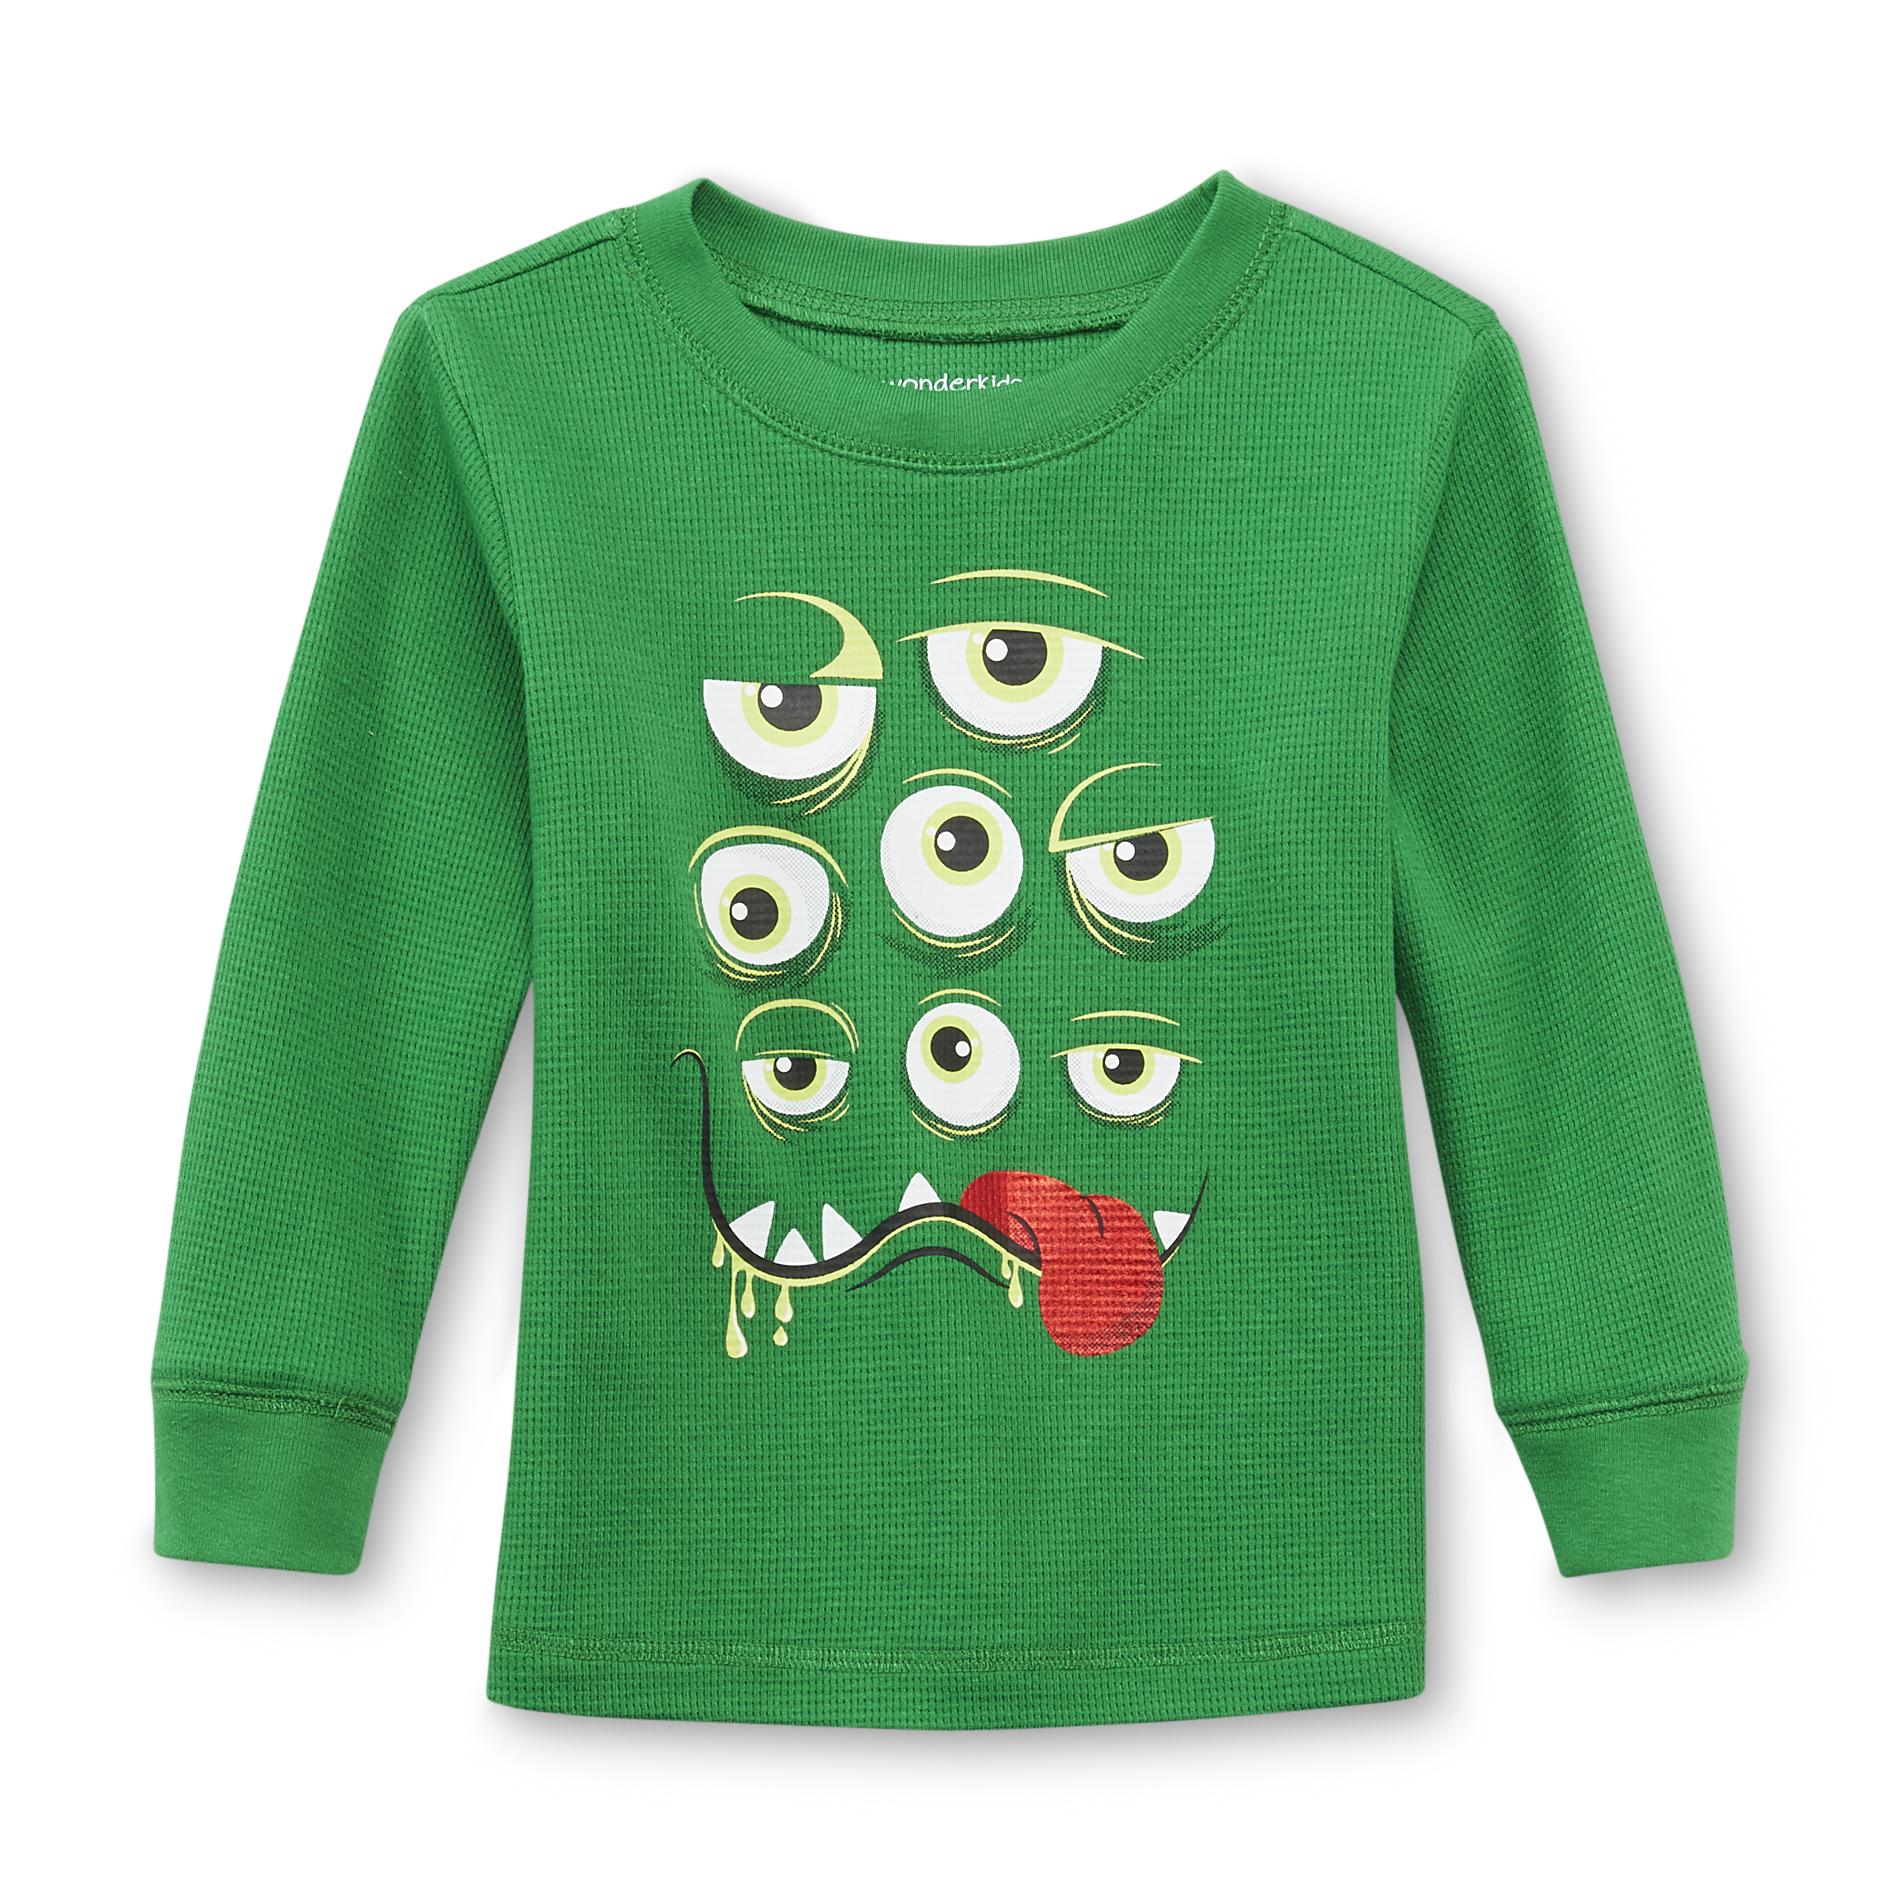 WonderKids Infant & Toddler Boy's Thermal Graphic T-Shirt - Monster Eyes